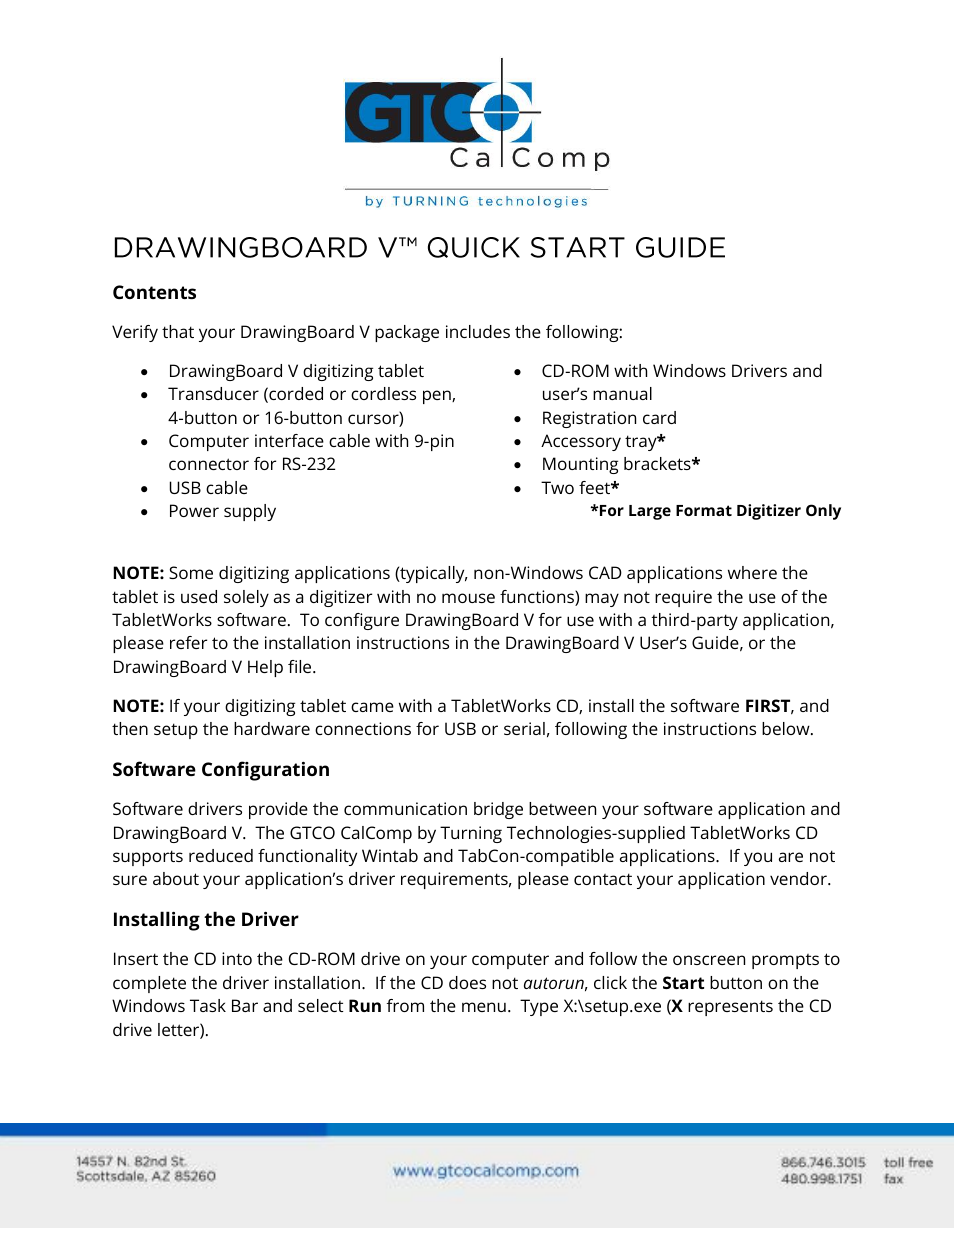 DrawingBoard V - Quick Start Guide